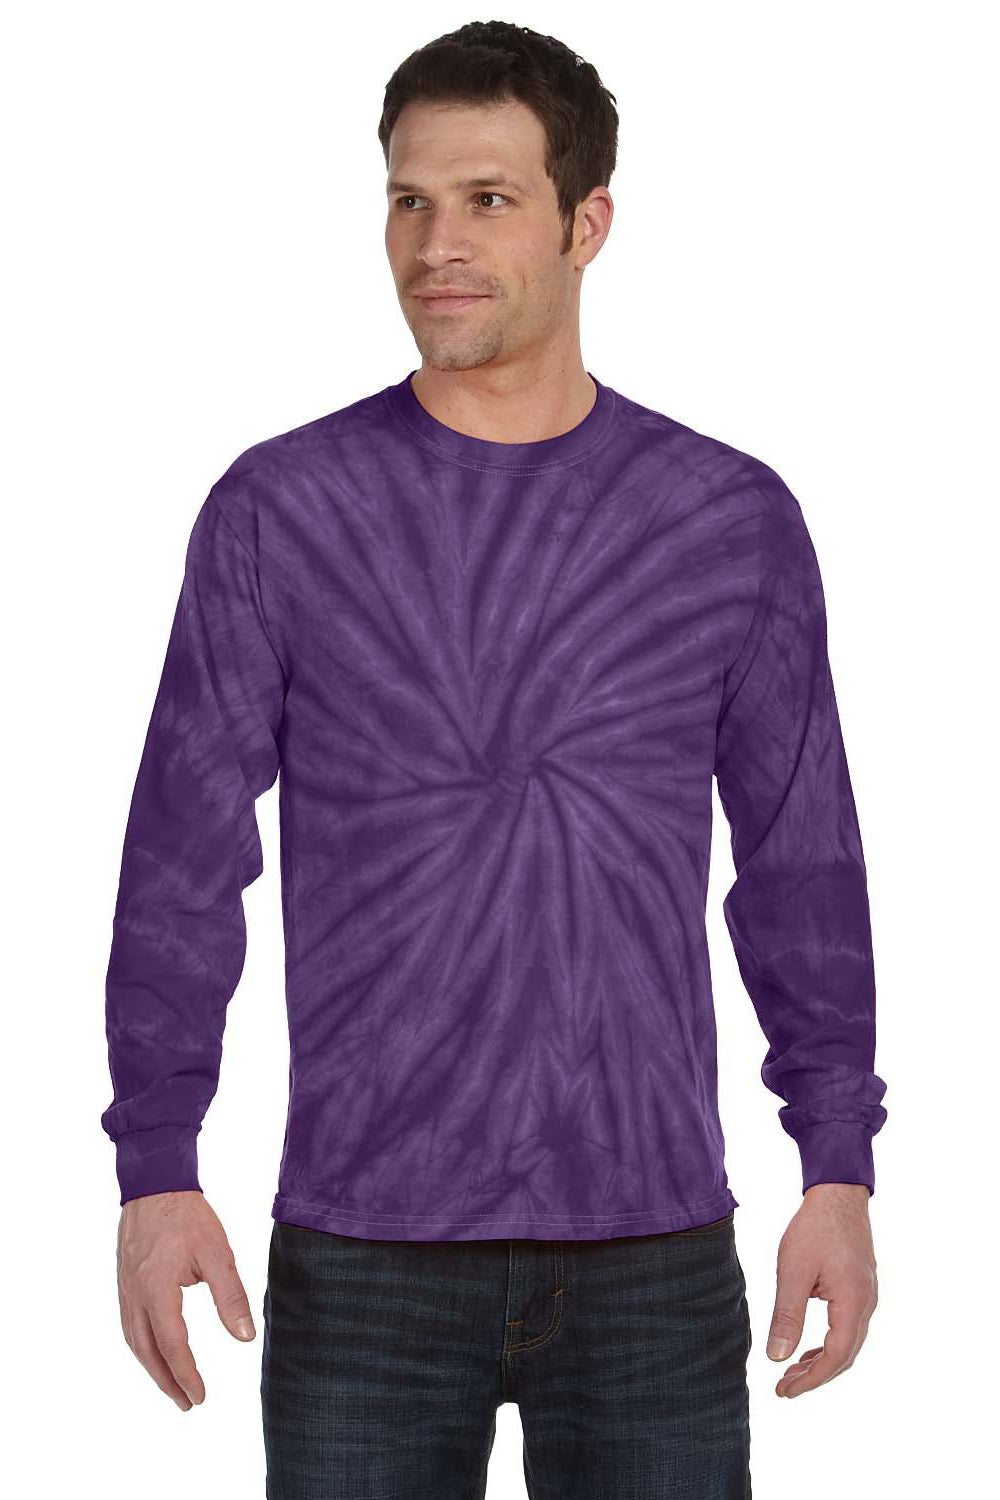 Tie-Dye CD2000 Mens Long Sleeve Crewneck T-Shirt Spider Purple Front